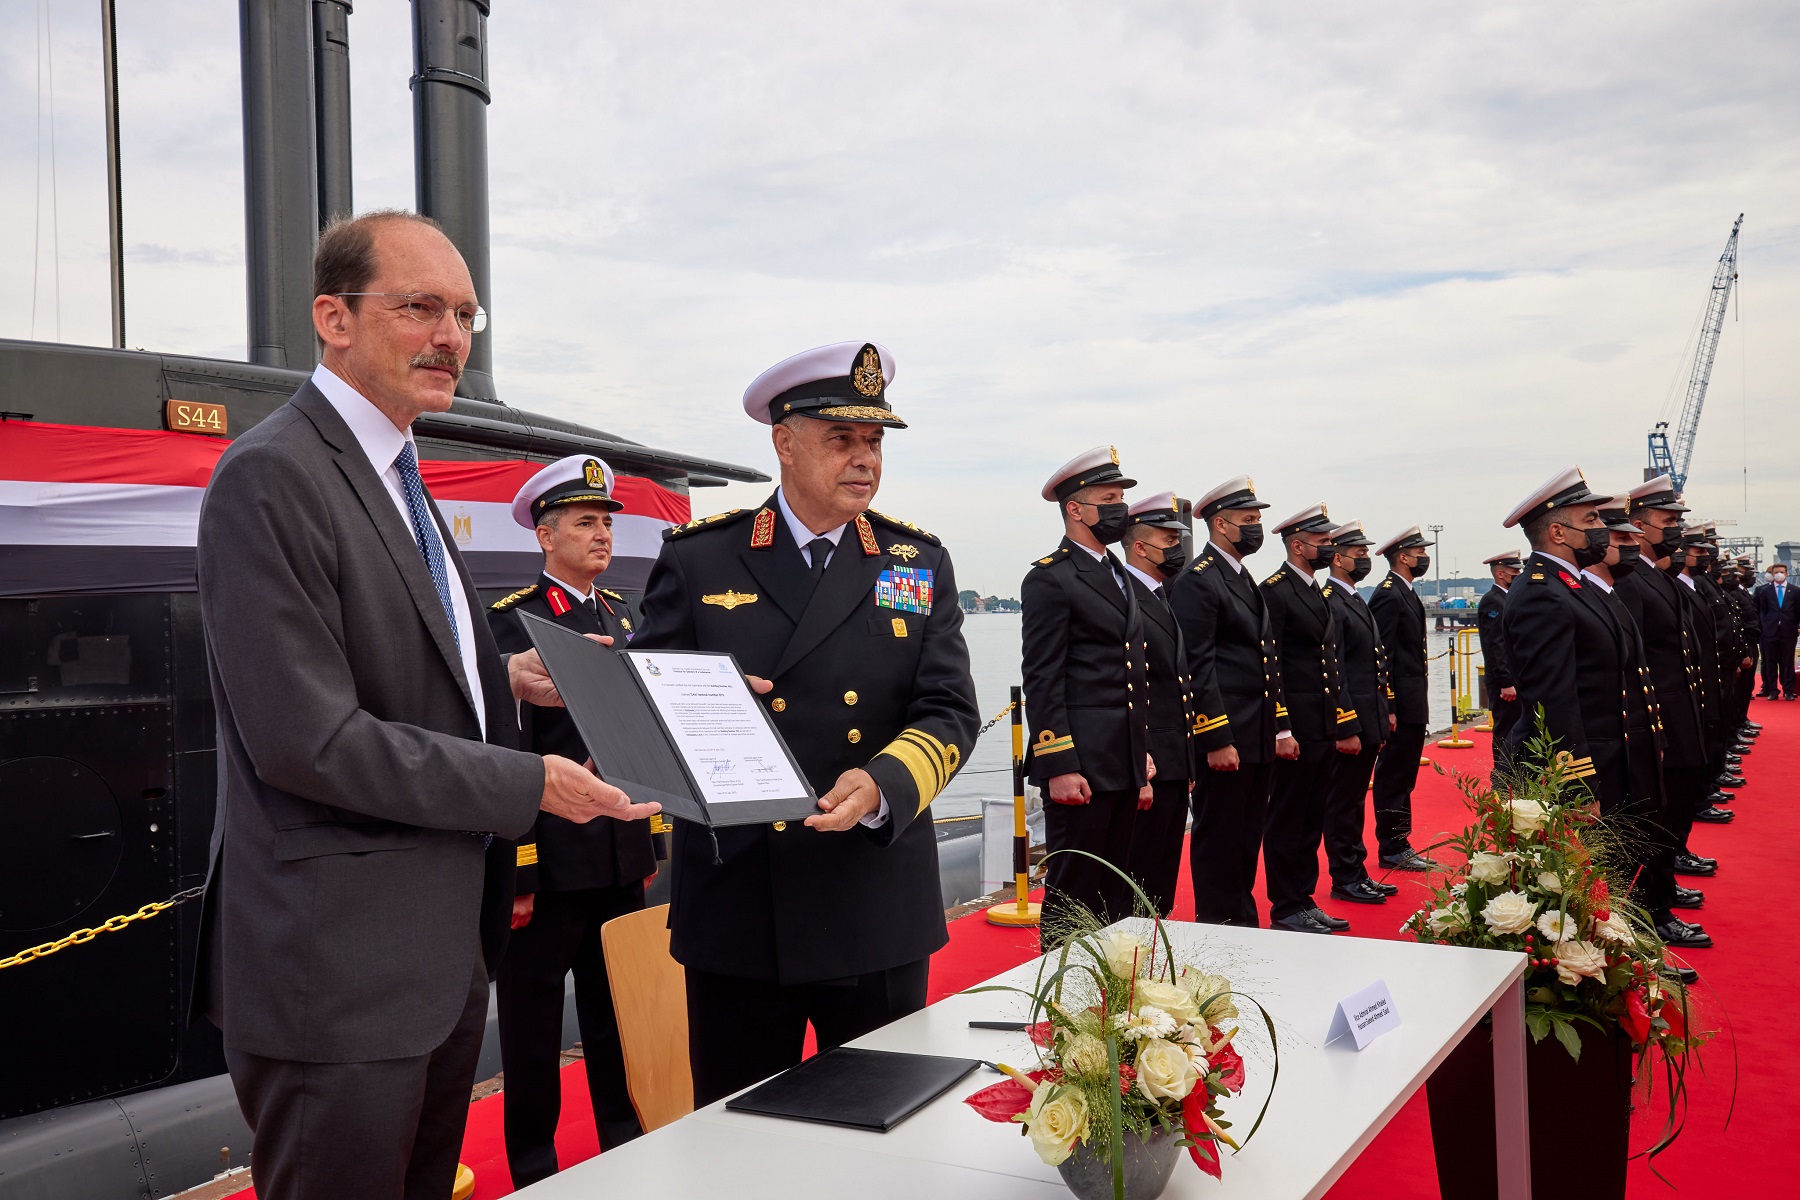 thyssenkrupp Marine Systems Hands Over Fourth 209/1400mod Class Submarine to Egyptian Navy